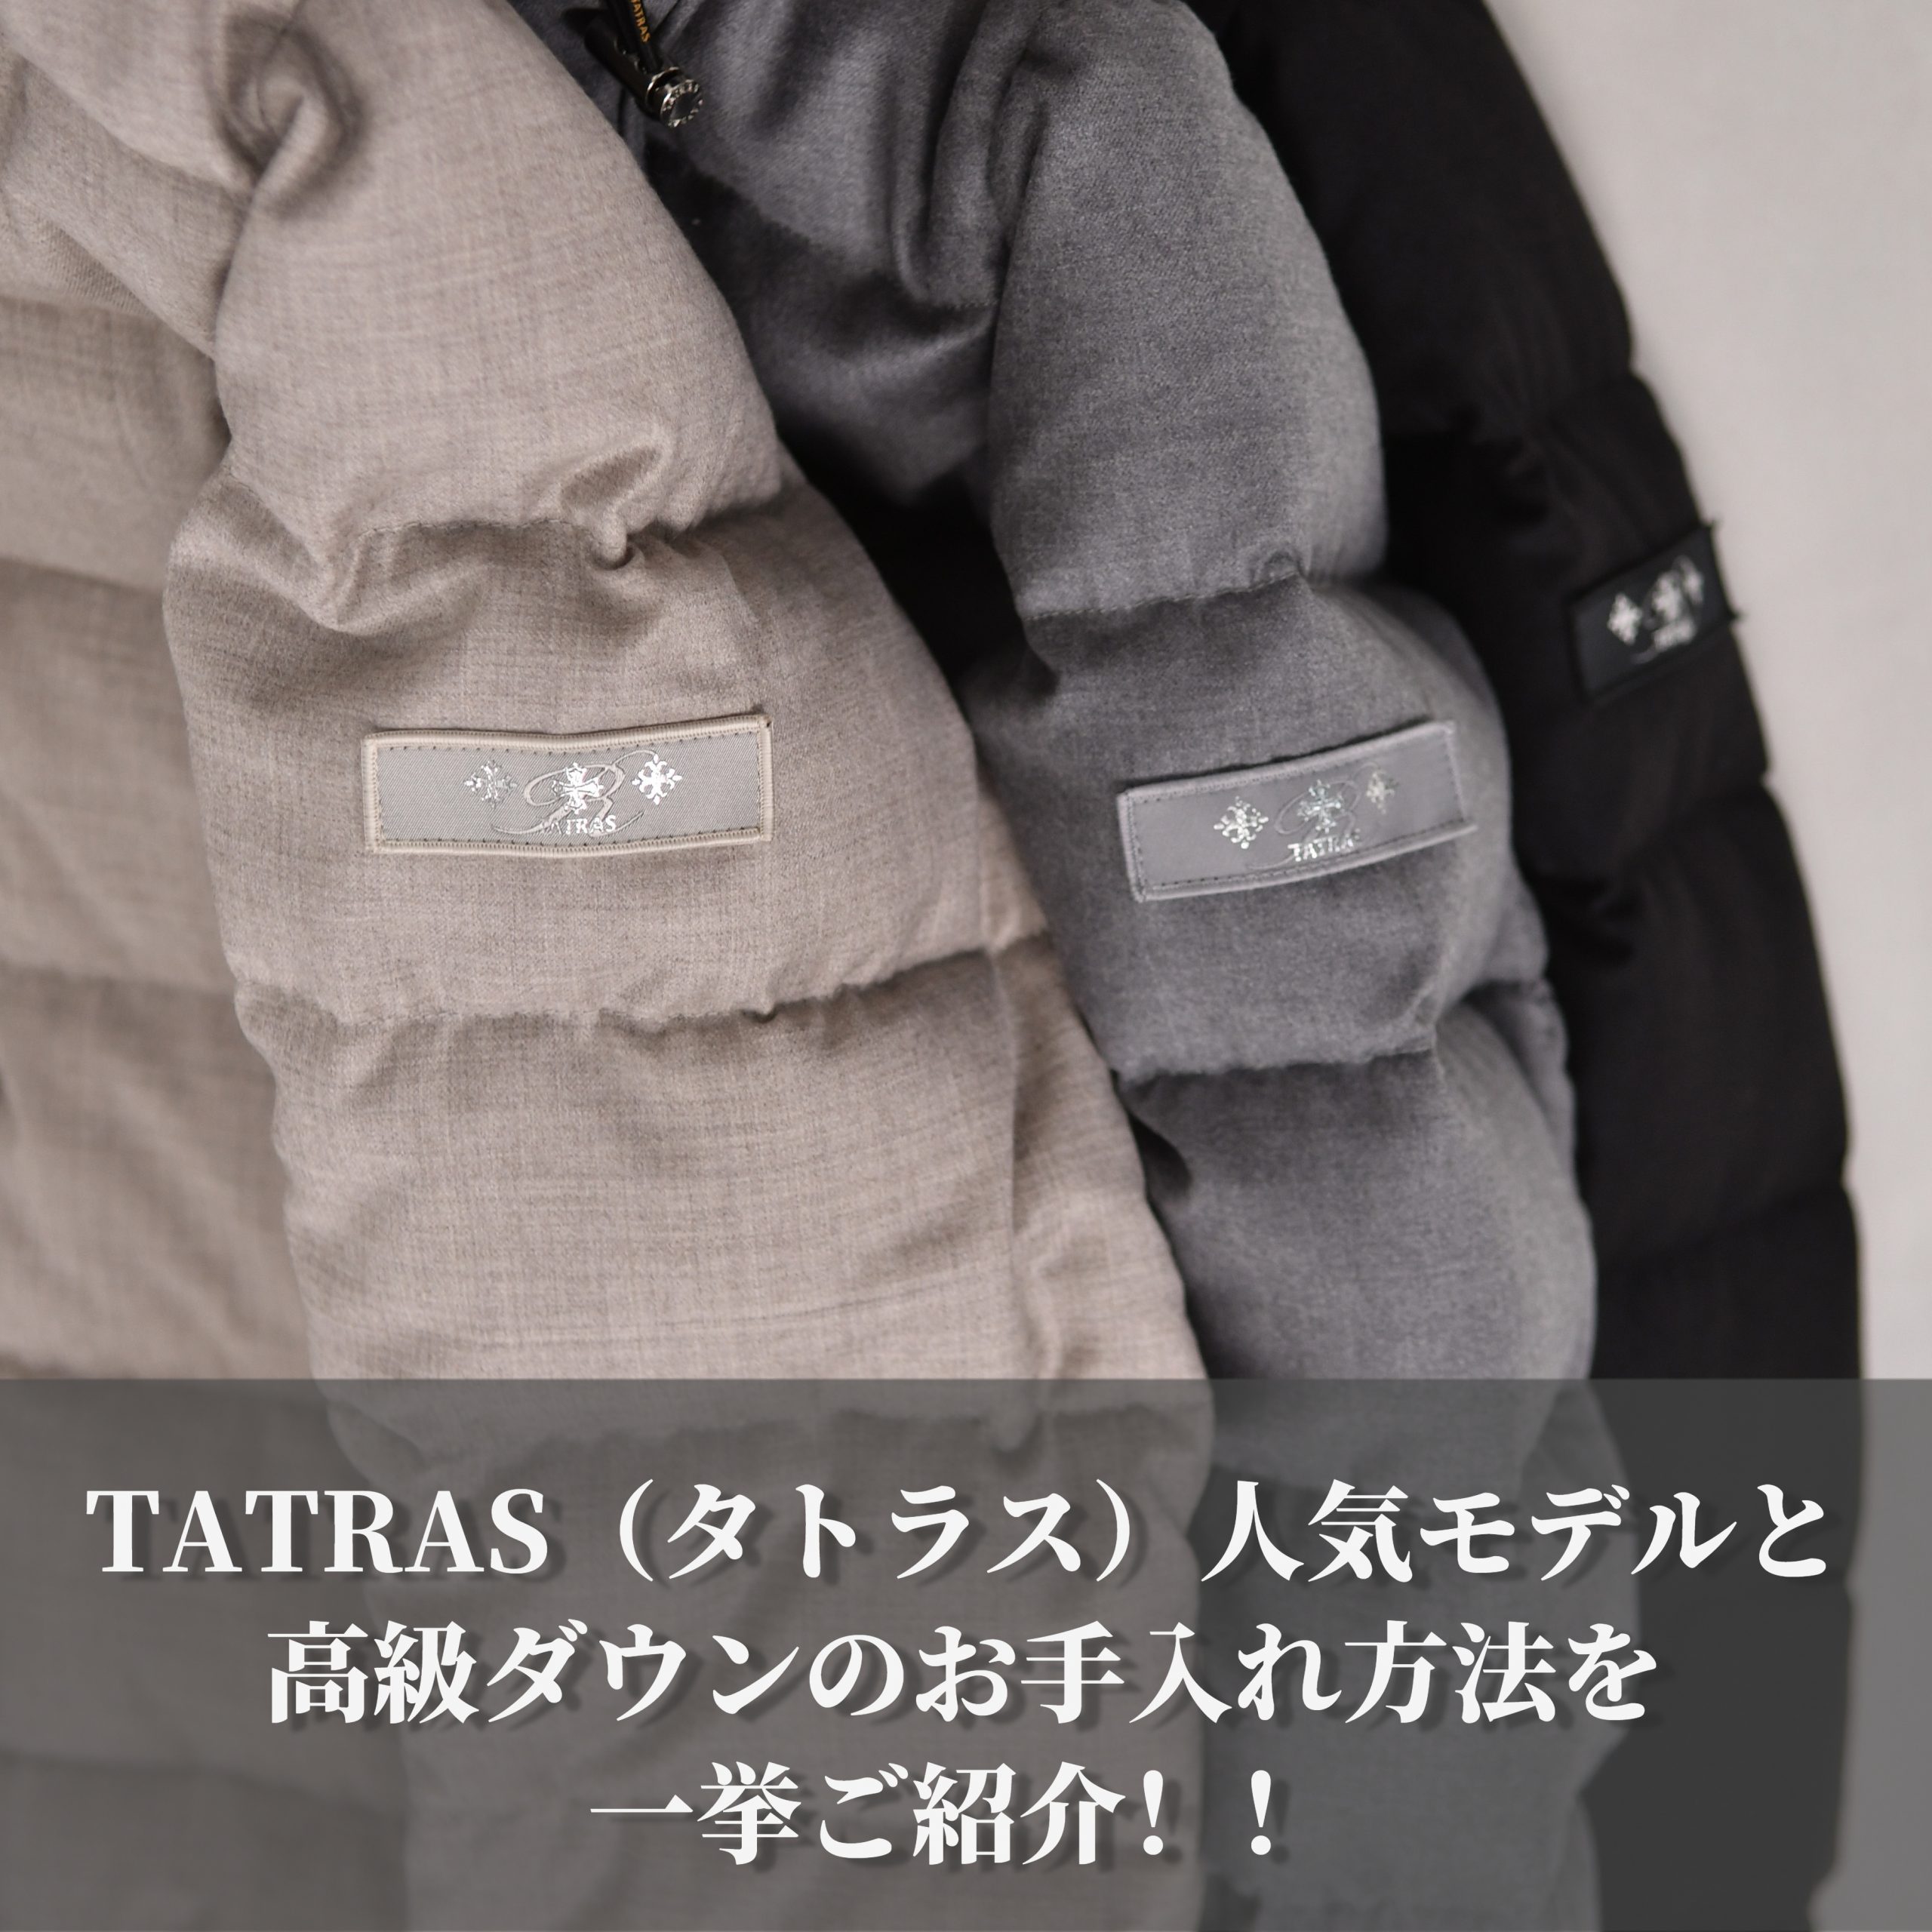 TATRAS(タトラス)の人気モデルご紹介とお手入れ方法 | 【Octet Blog ...